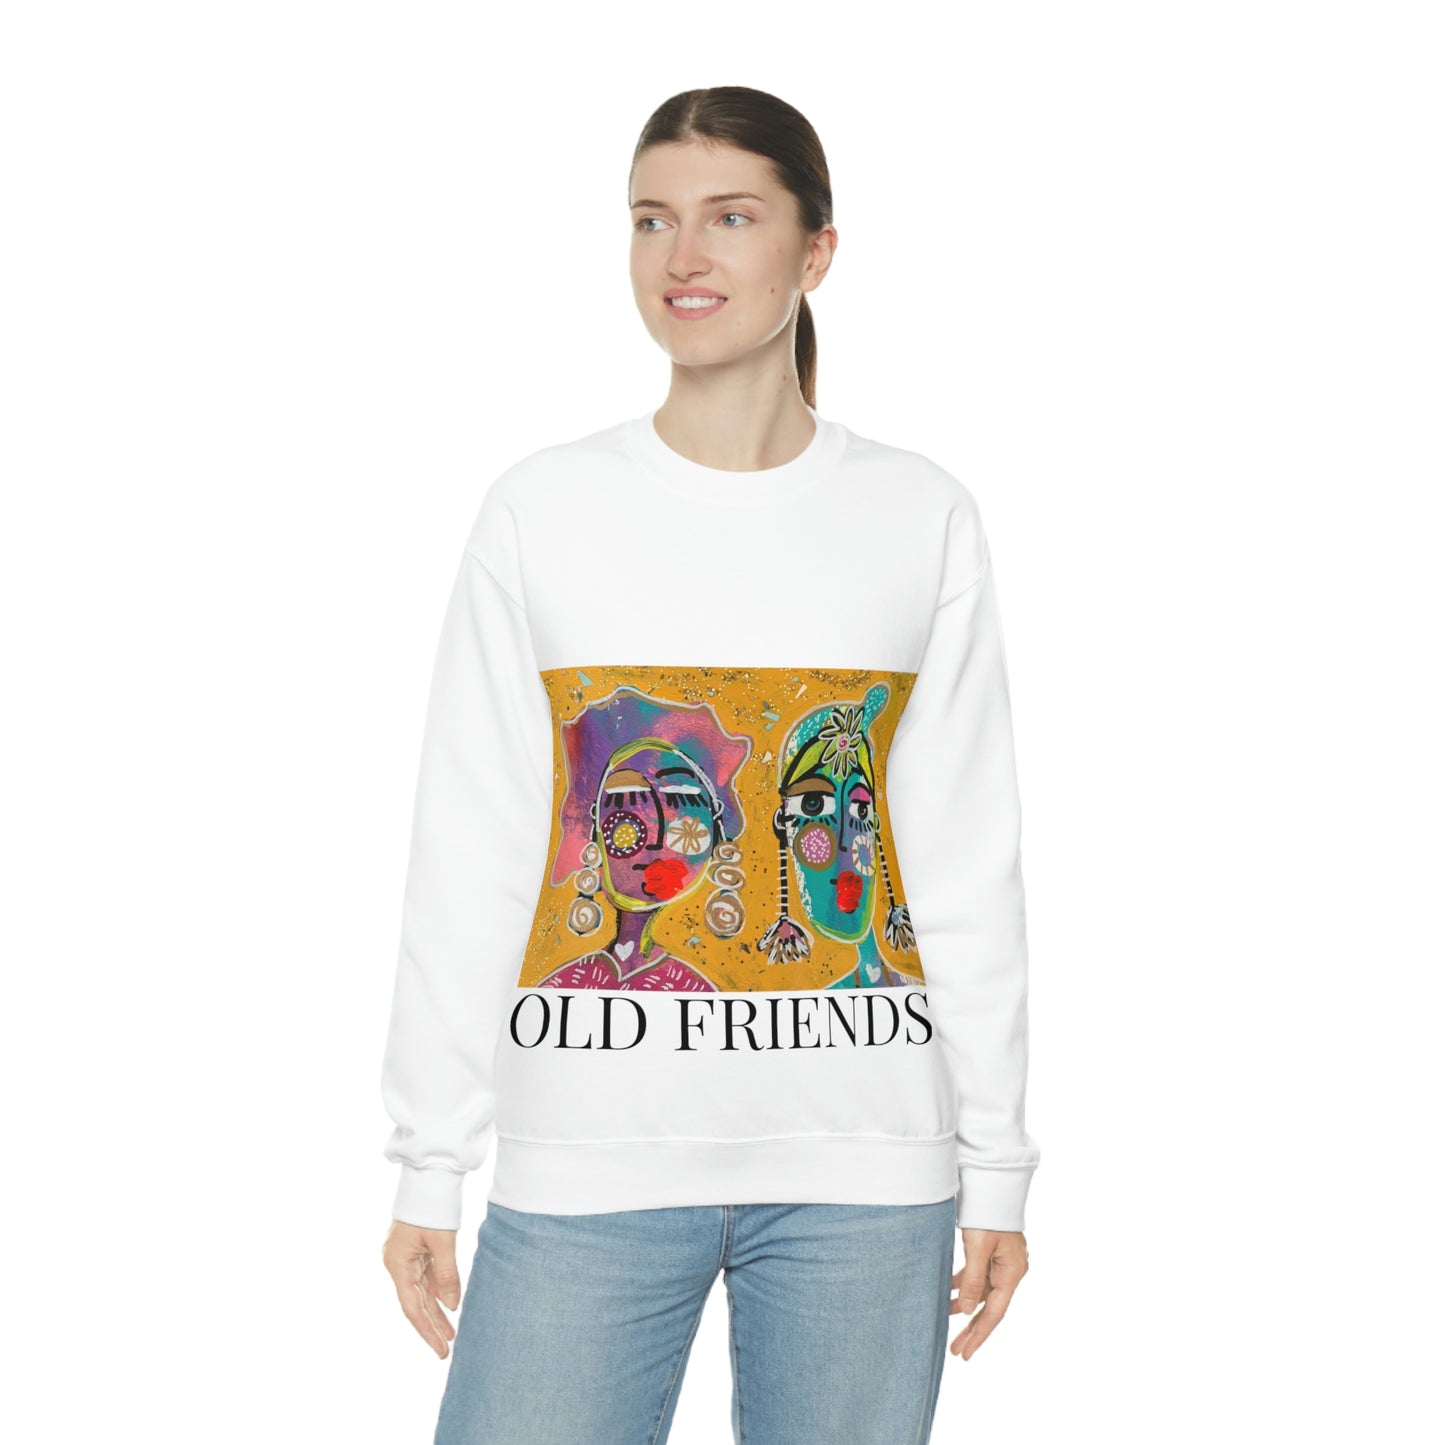 "OLD FRIENDS" Girl Talk Art Series Unisex Heavy Blend Crewneck Sweatshirt